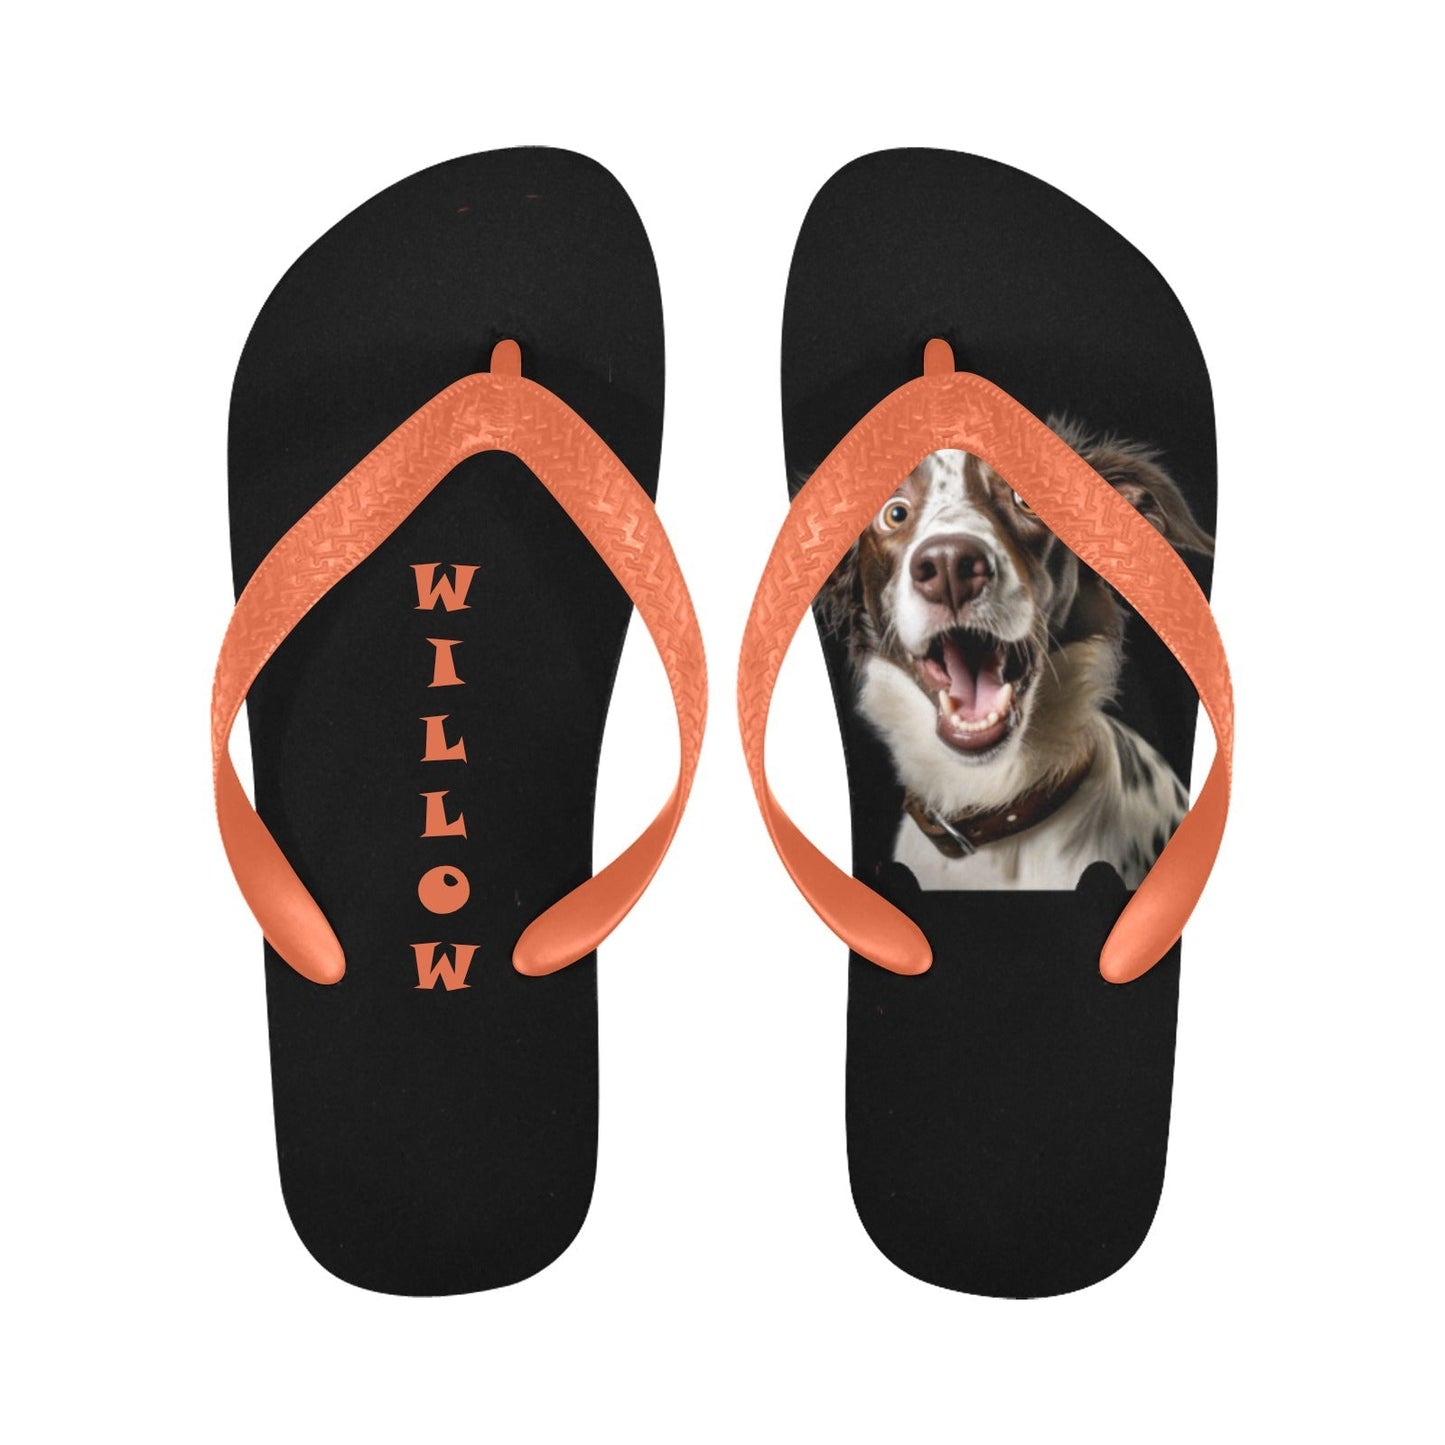 Personalized Flip-Flops designs